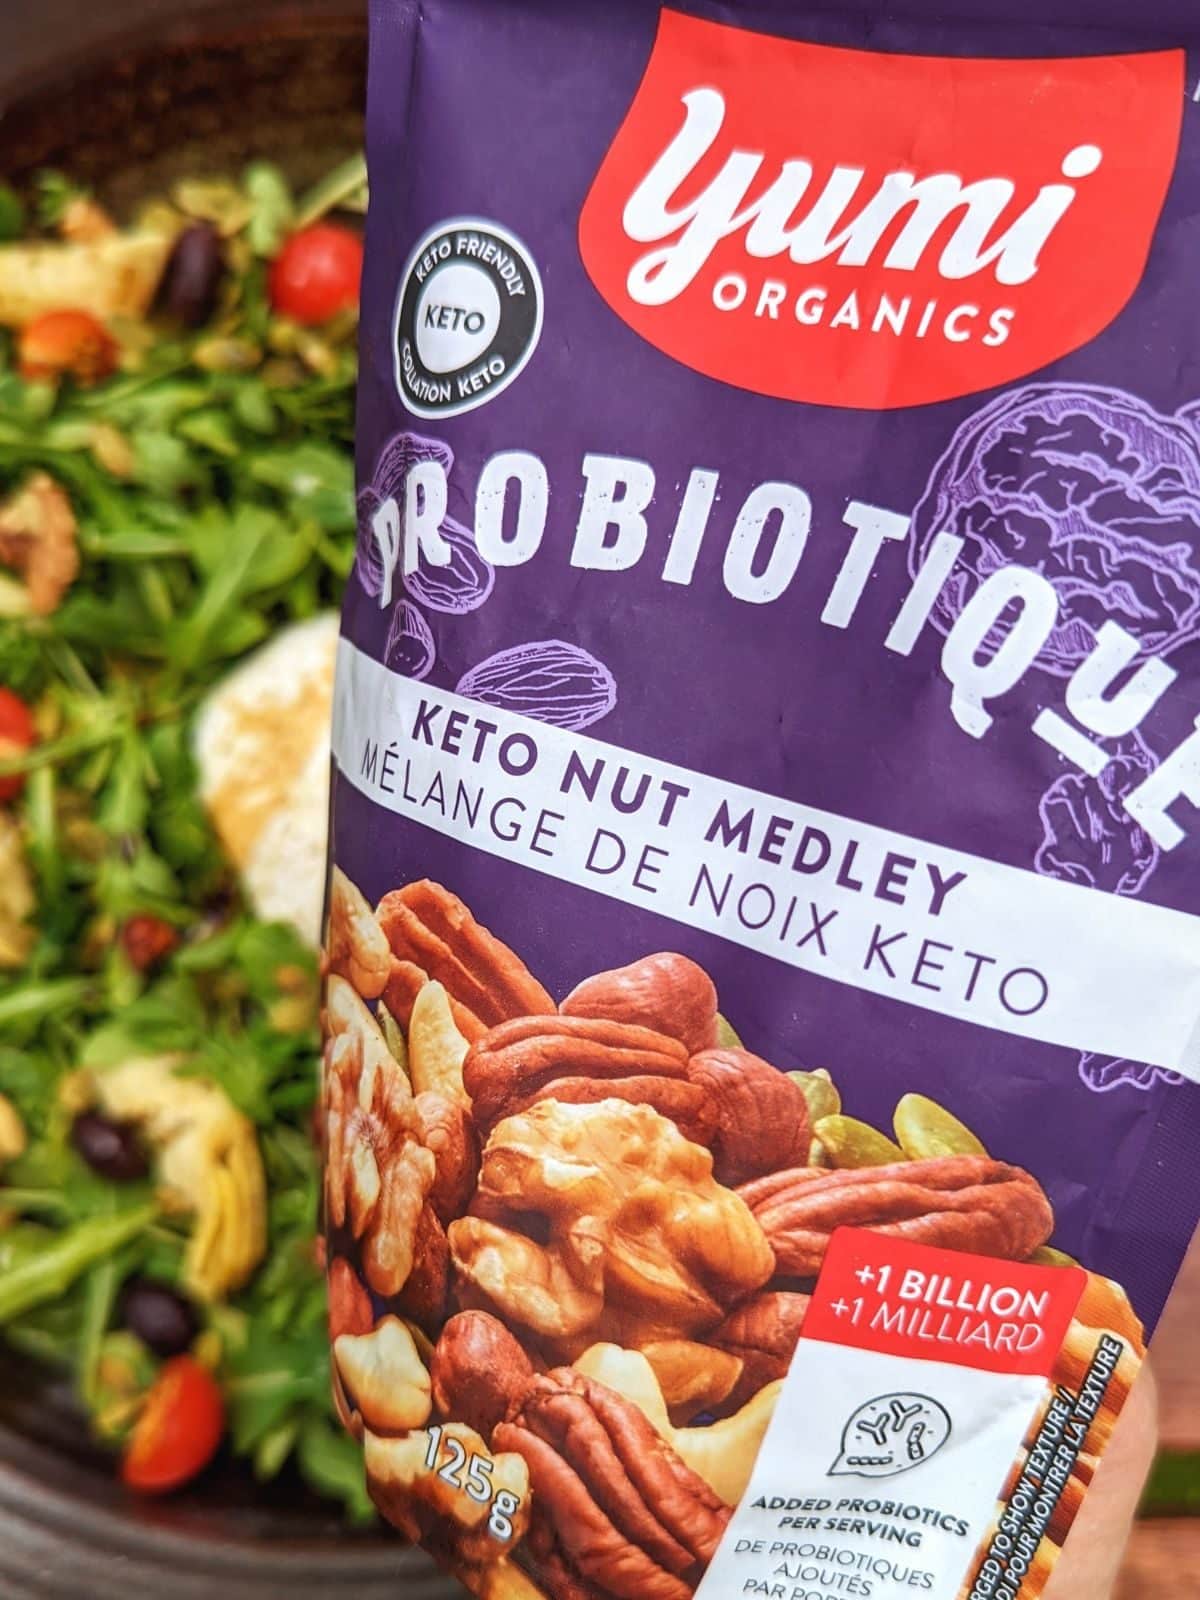 Noix probiotiques Yumi organics et une salade